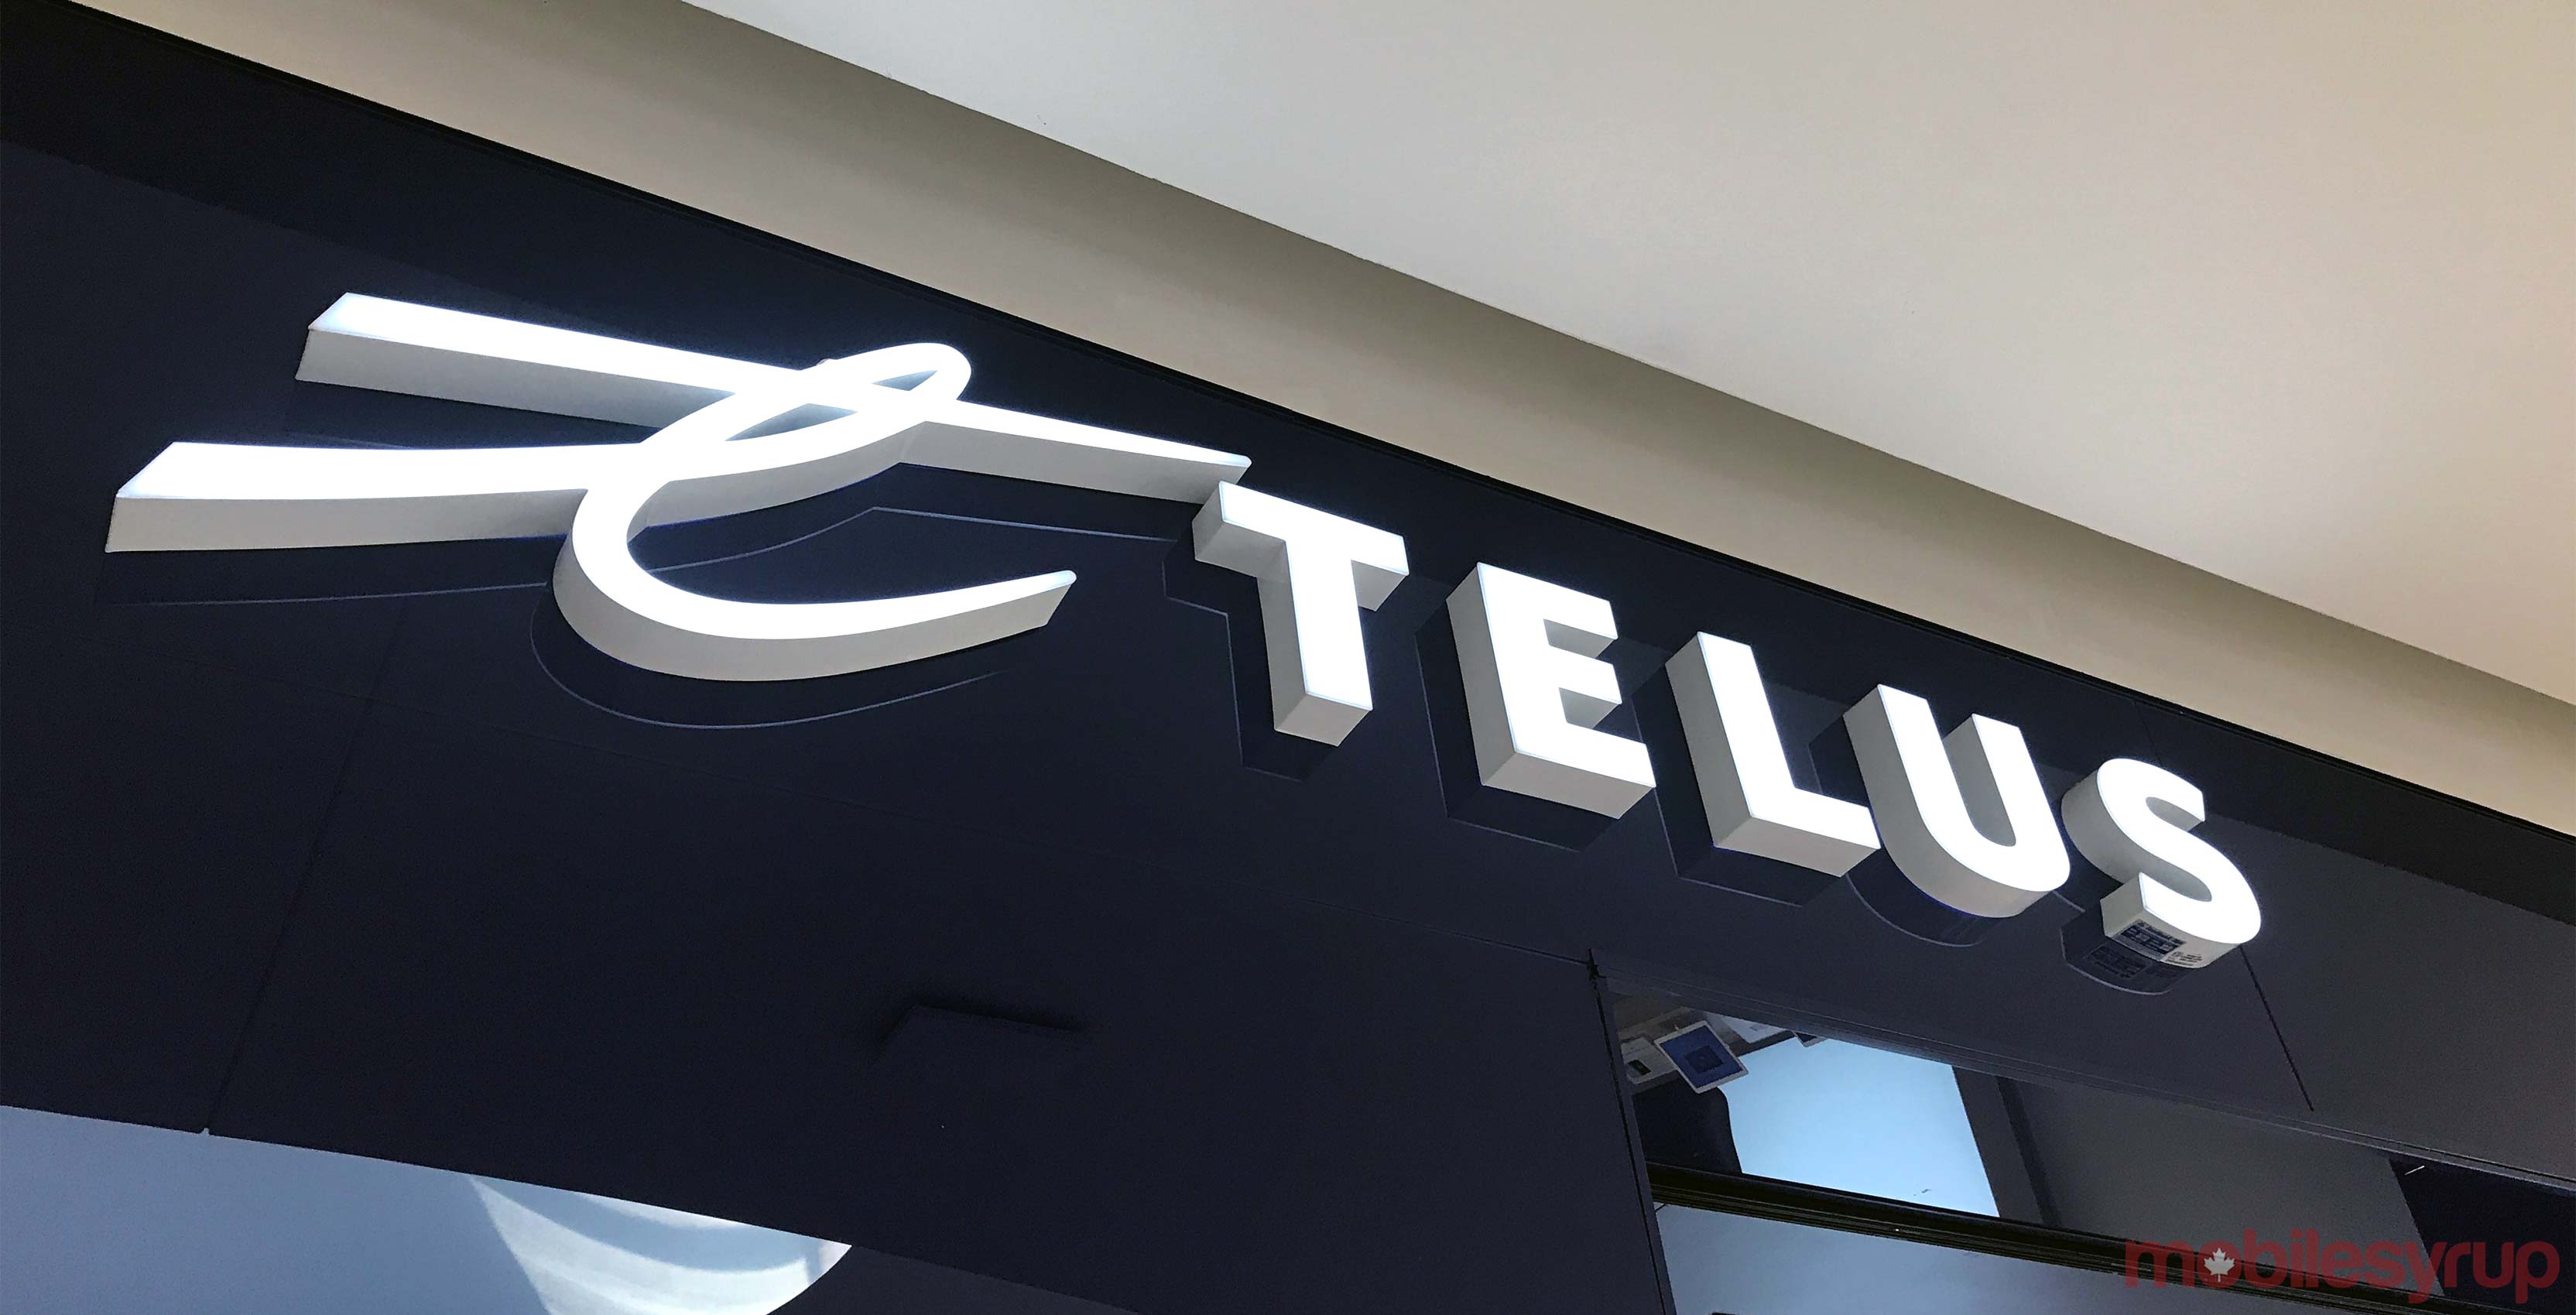 Telus logo on wall